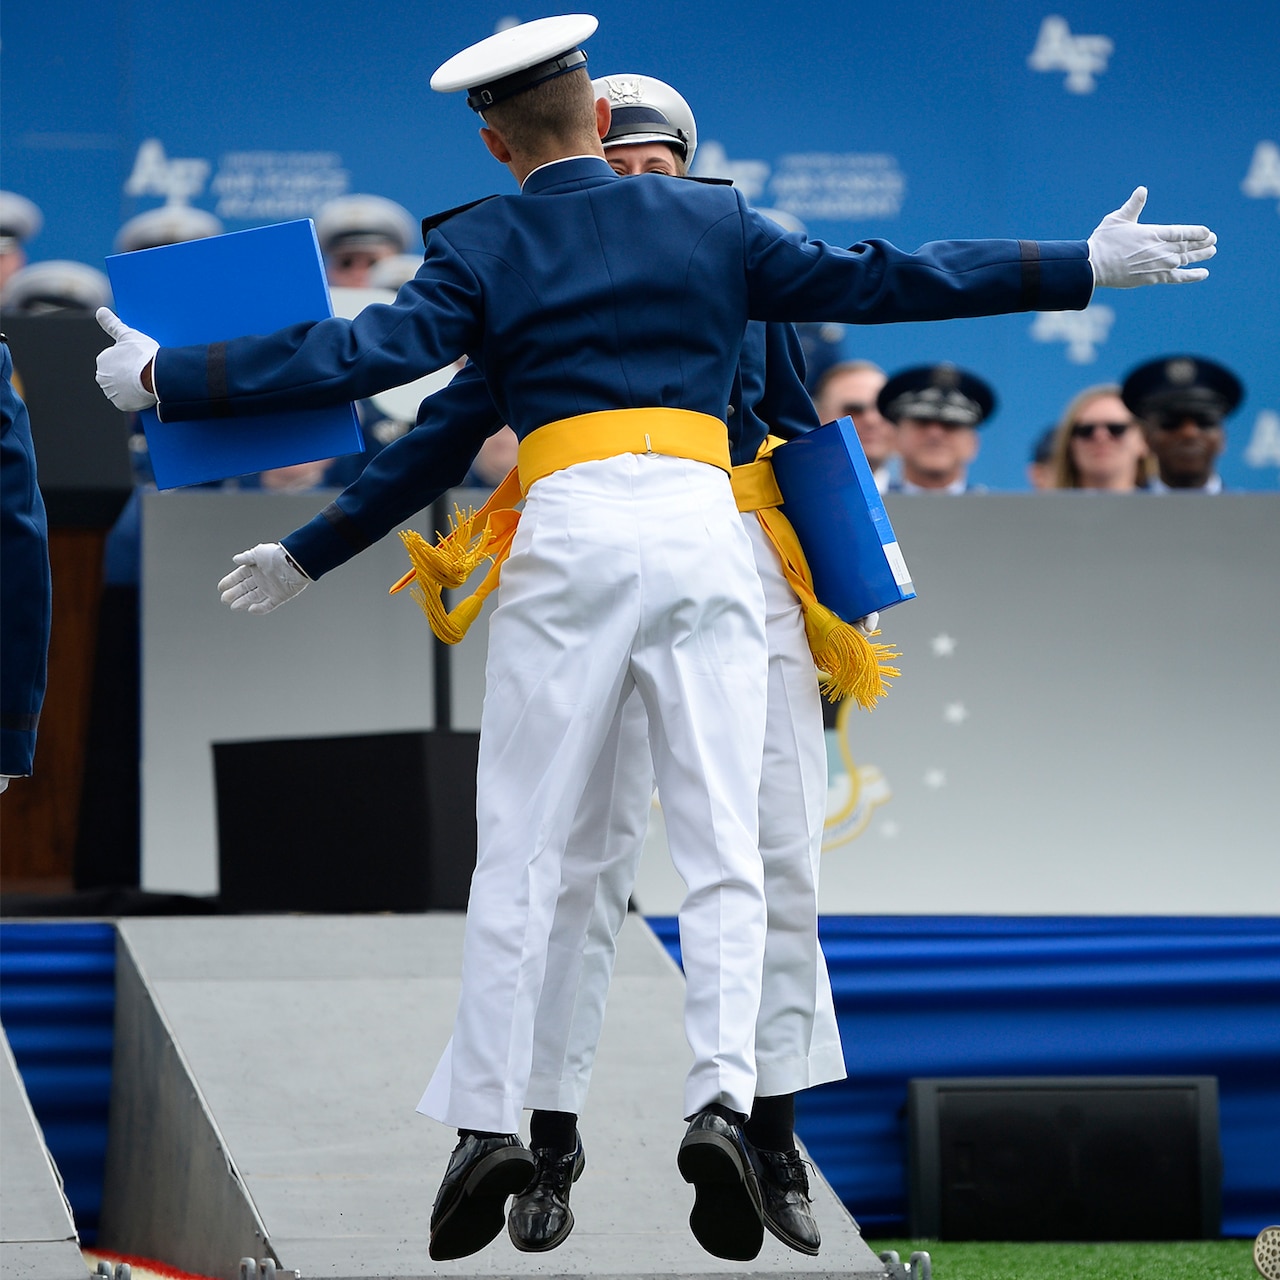 U.S. Air Force Academy graduates celebrate after receiving their diplomas.